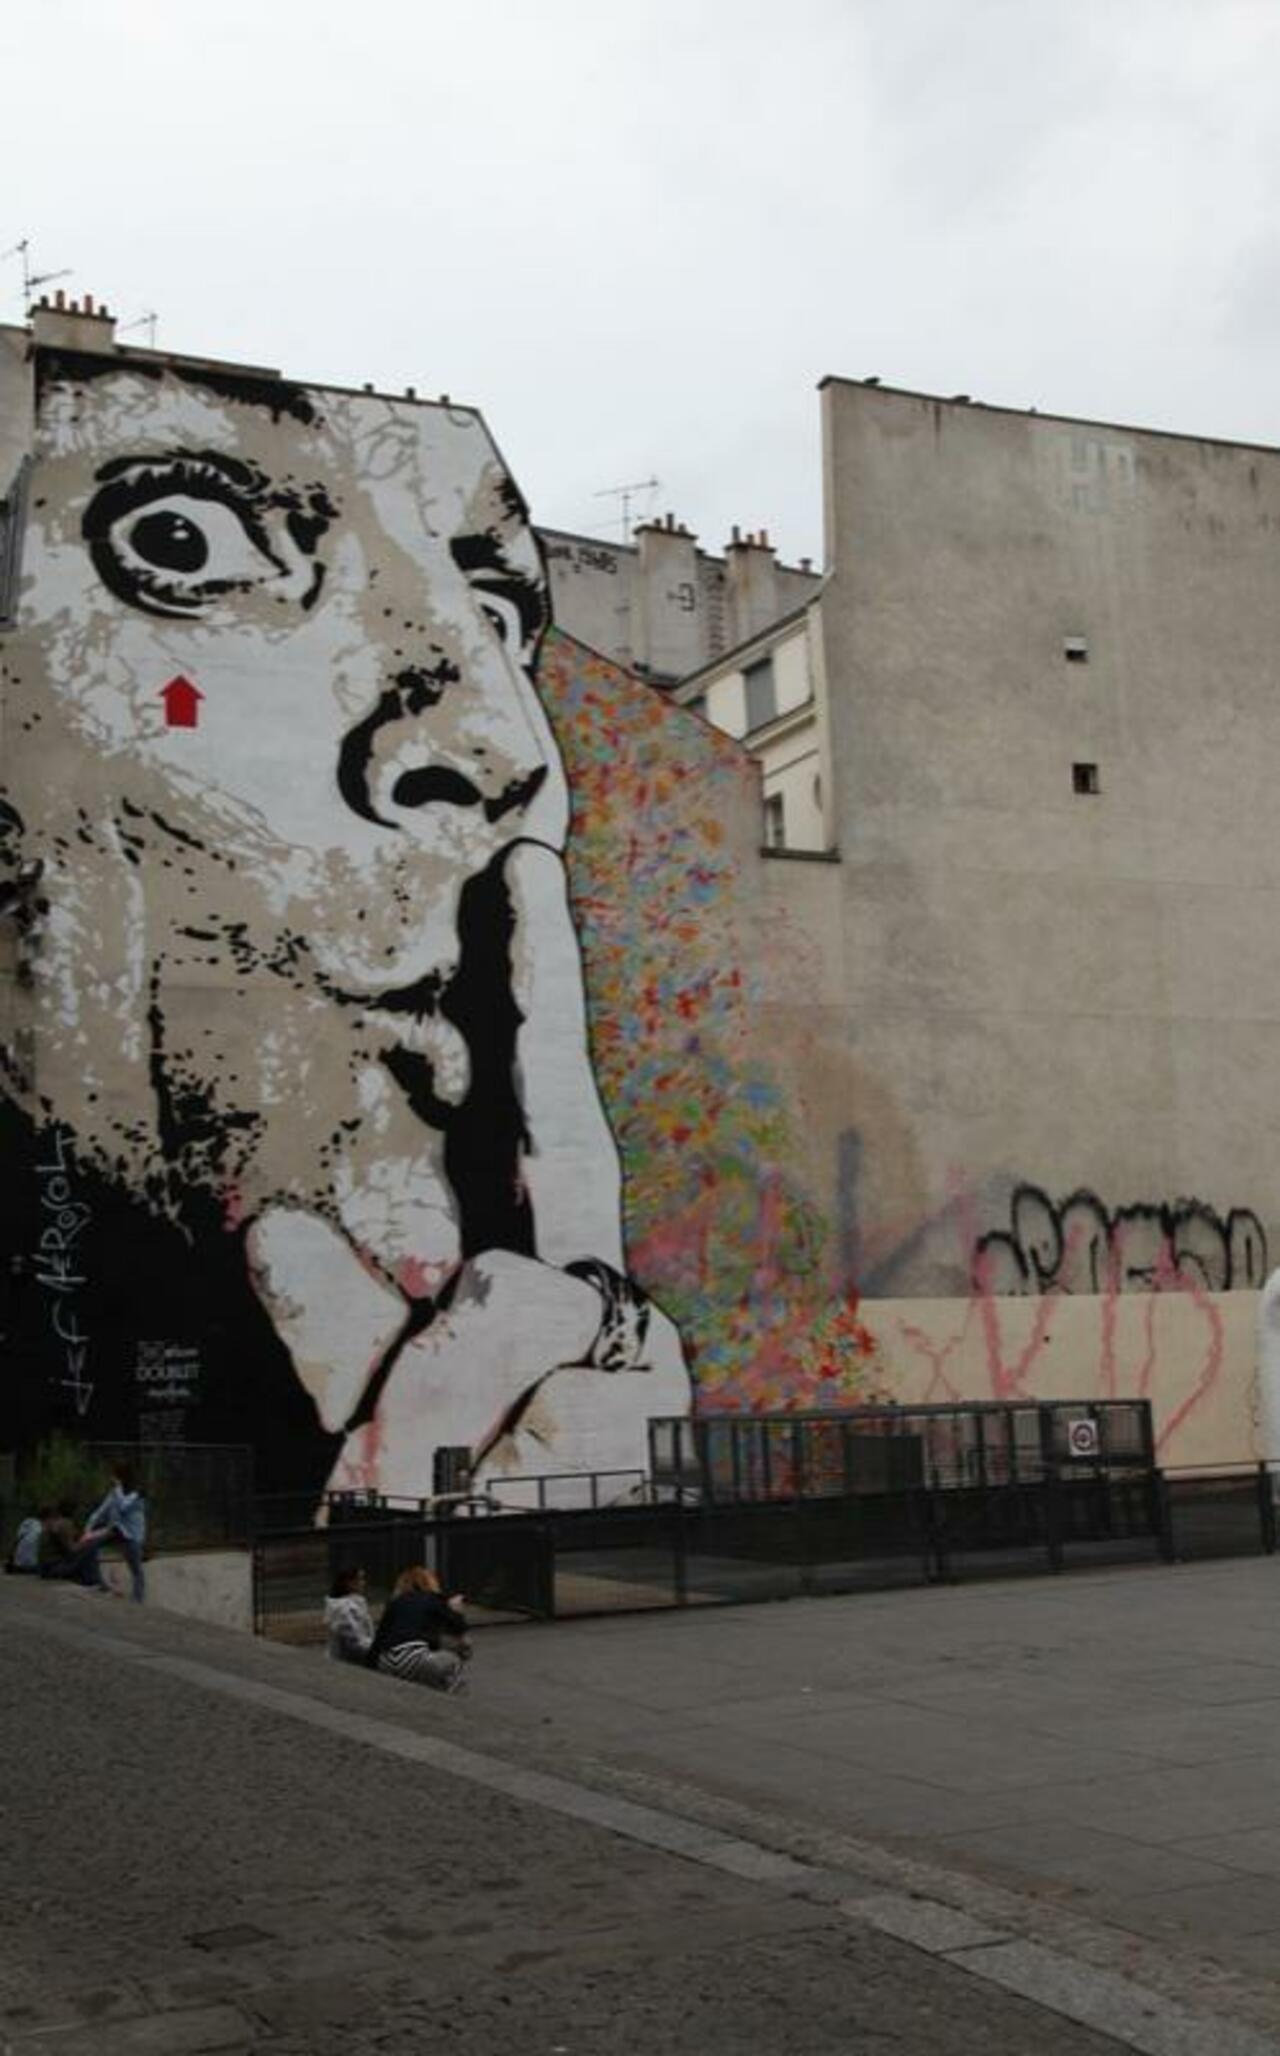 Grateful for Graffiti - Street Art in Poetic Paris http://www.thepariseffect.net/blog/grateful-for-graffiti #thepariseffect #graffiti #Paris #art http://t.co/6EXVwMcuct